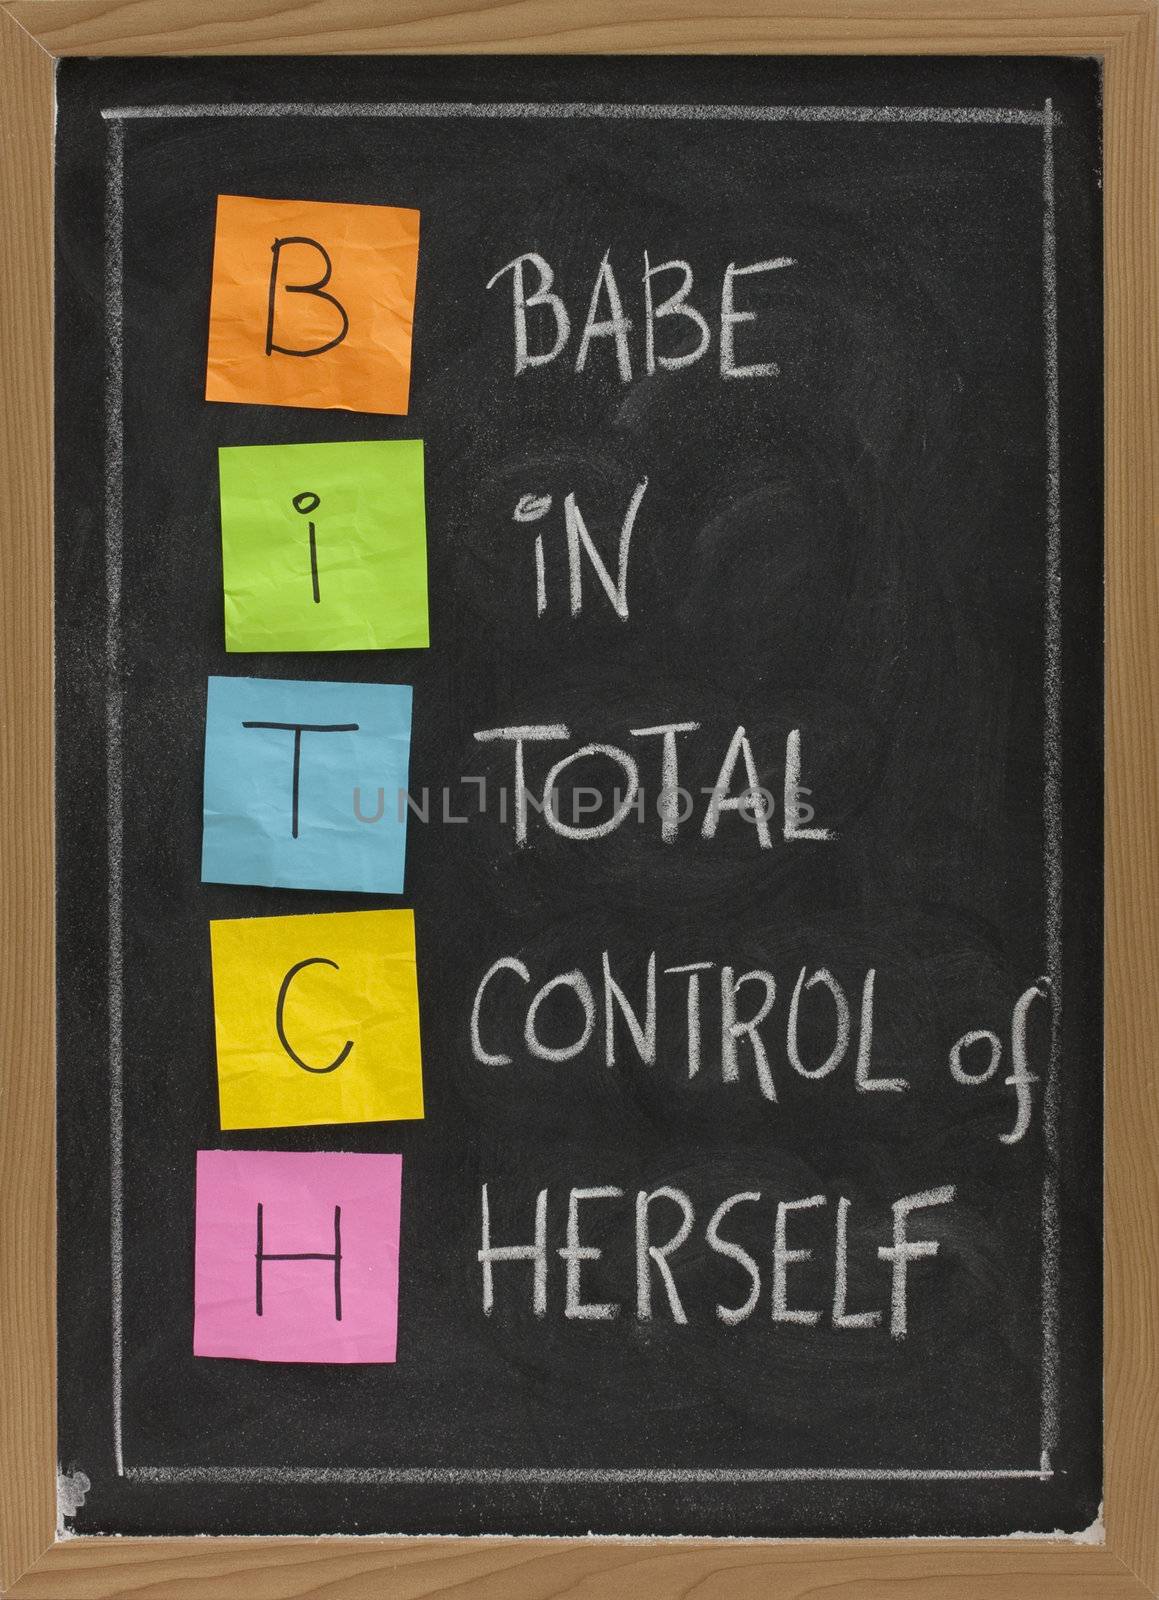 bitch - humorous acronym on blackboard by PixelsAway